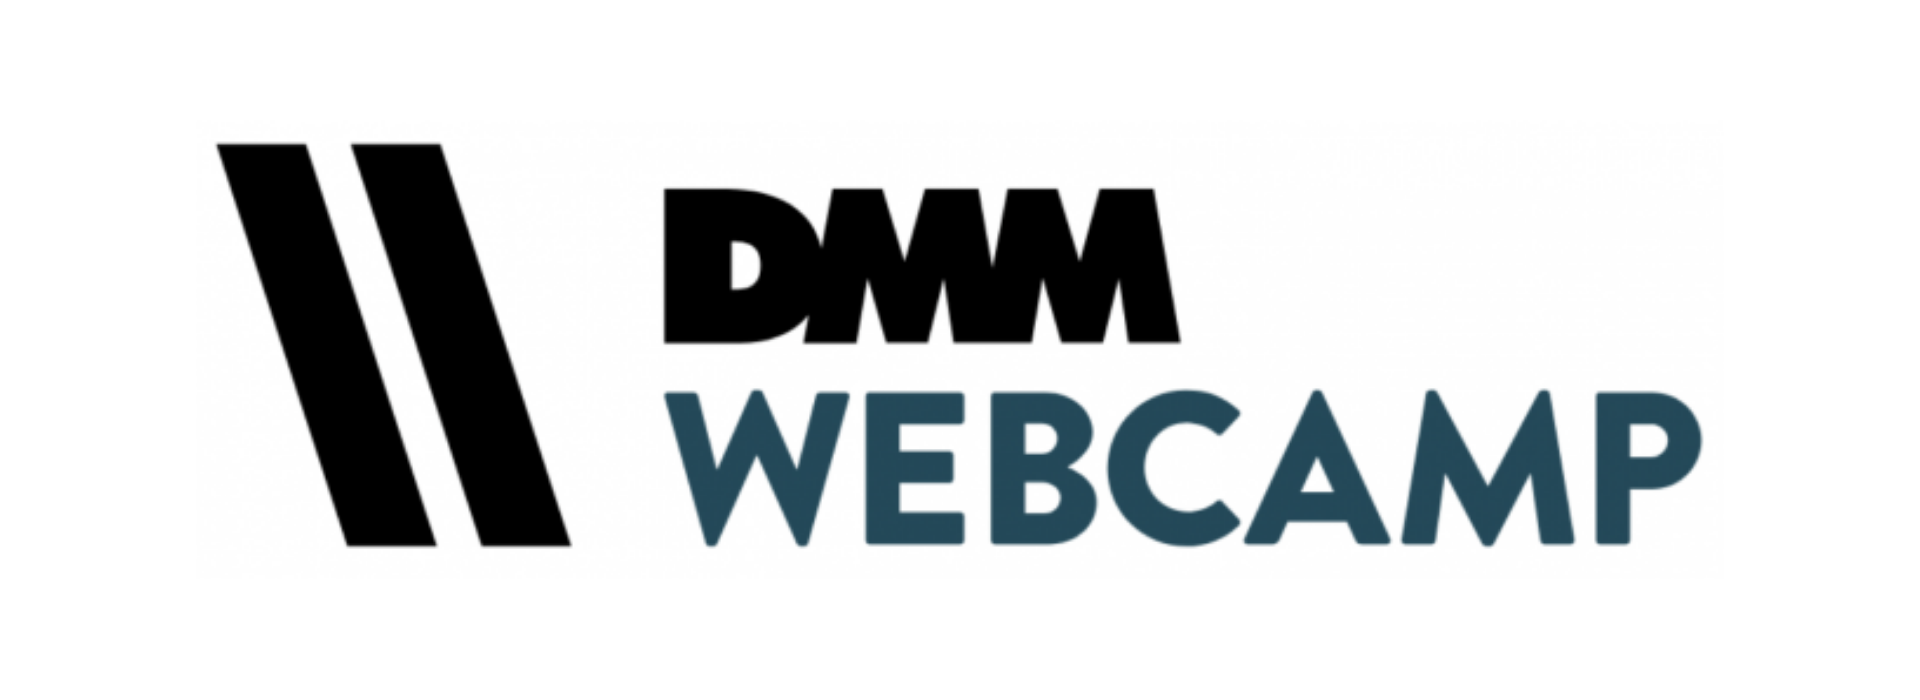 dmm webcampのロゴ